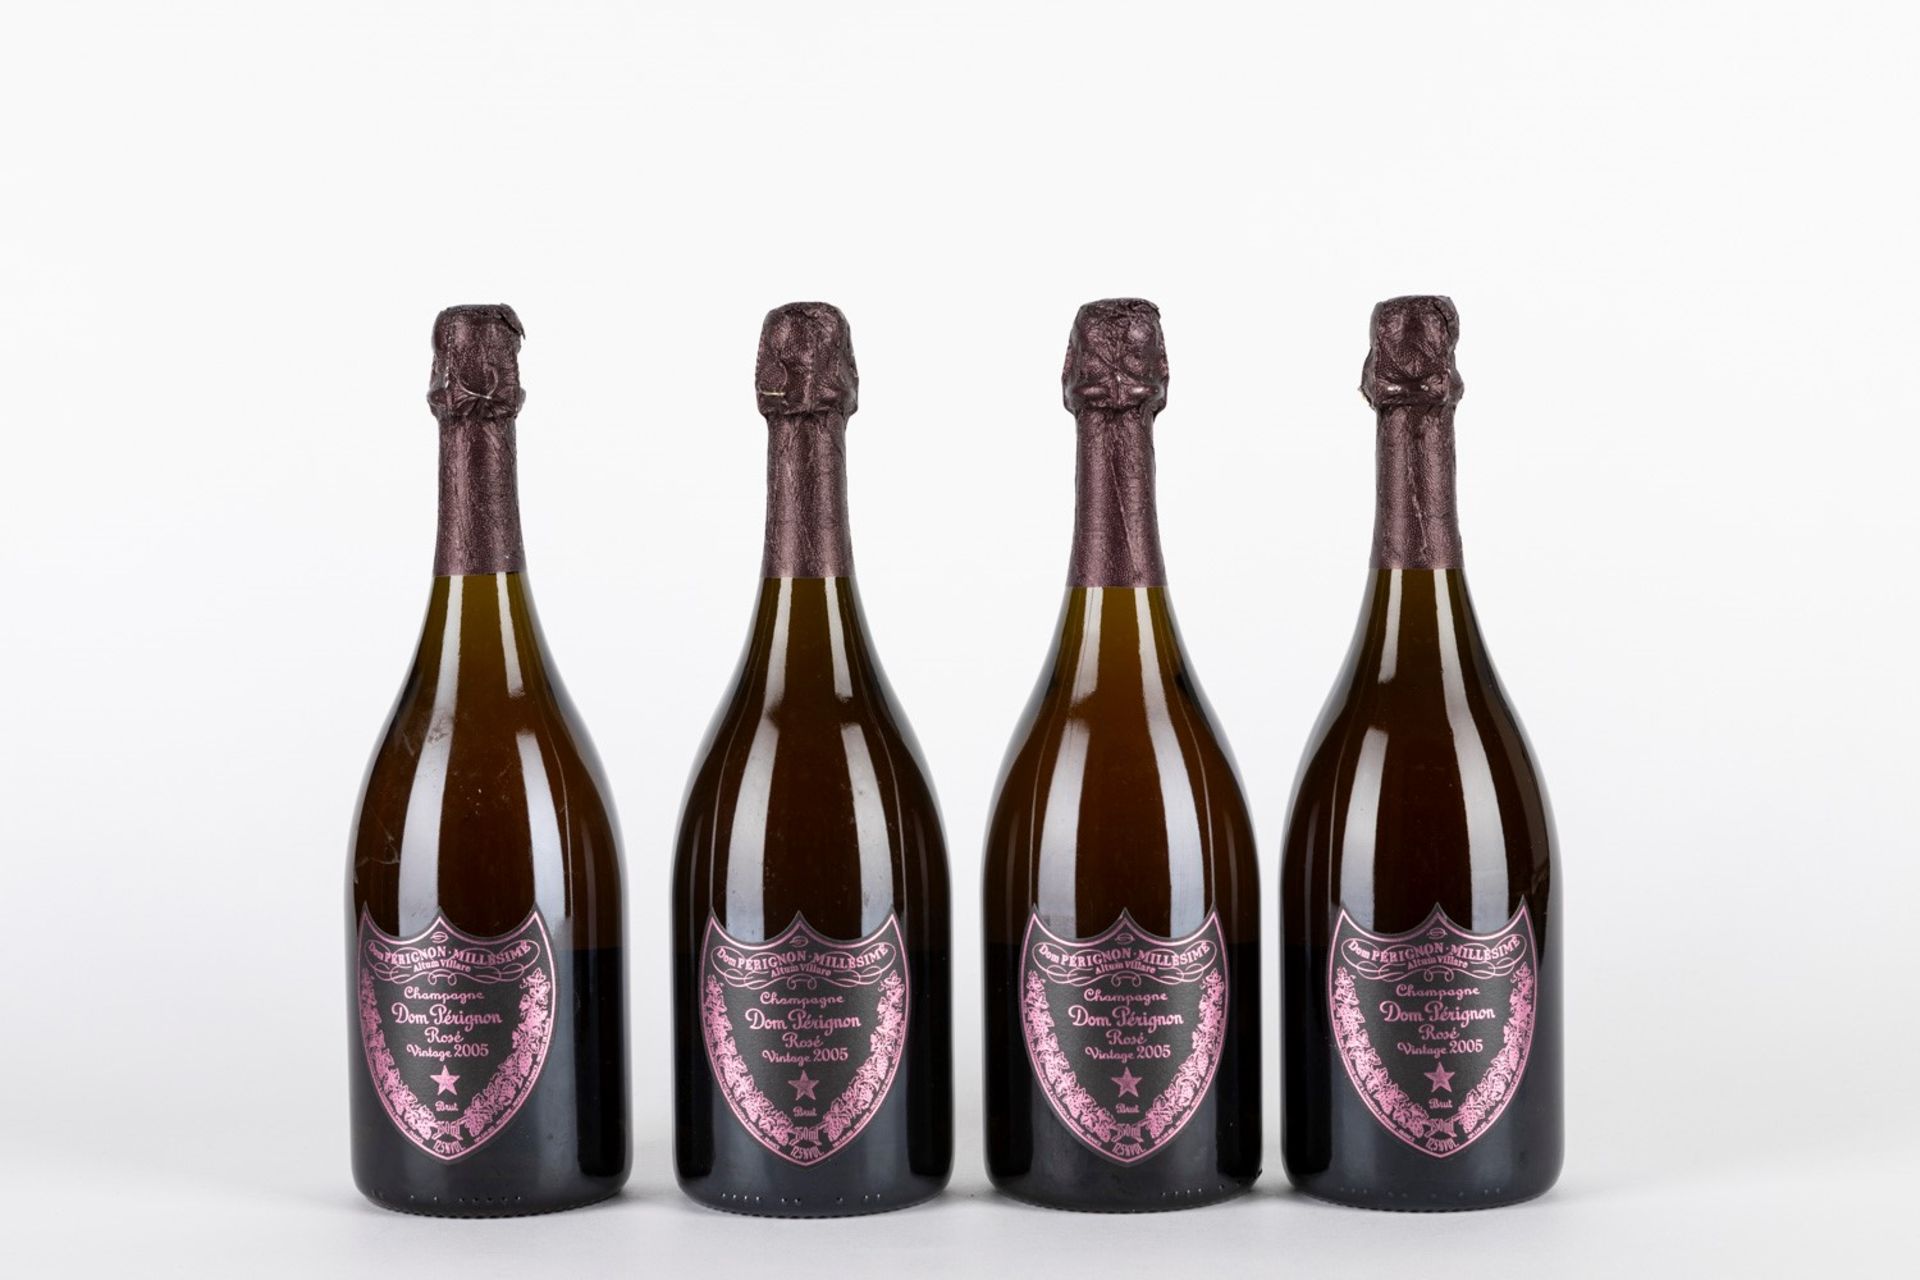 France - Champagne / Dom Perignon Rose' 2005 (4 BT)